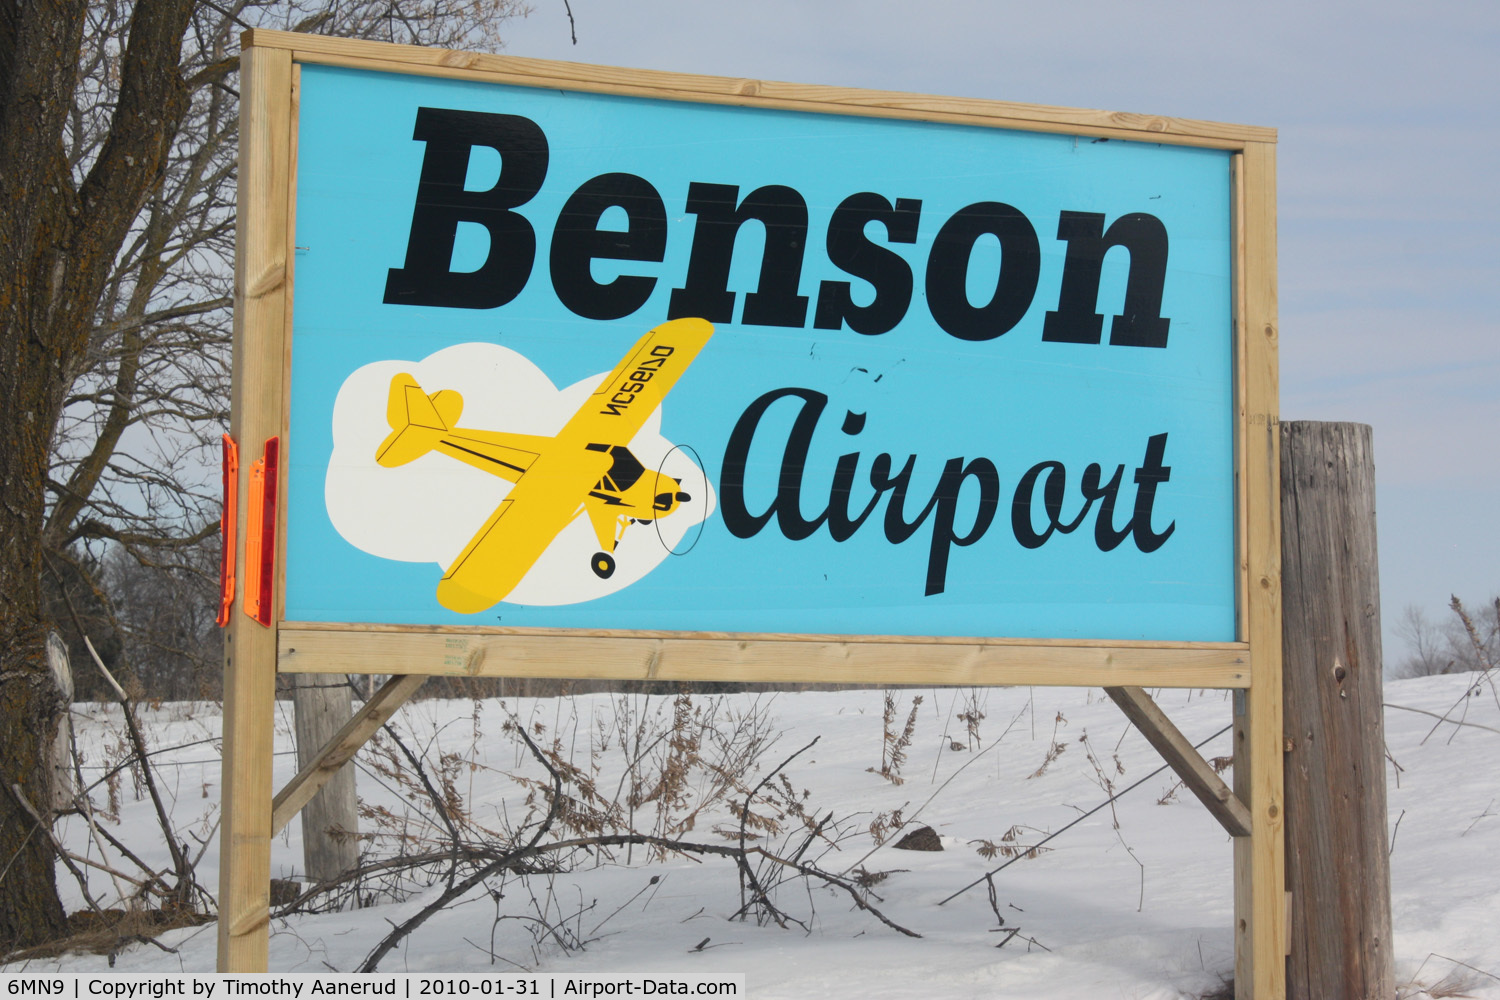 Benson Airport (6MN9) - Newer airport sign.